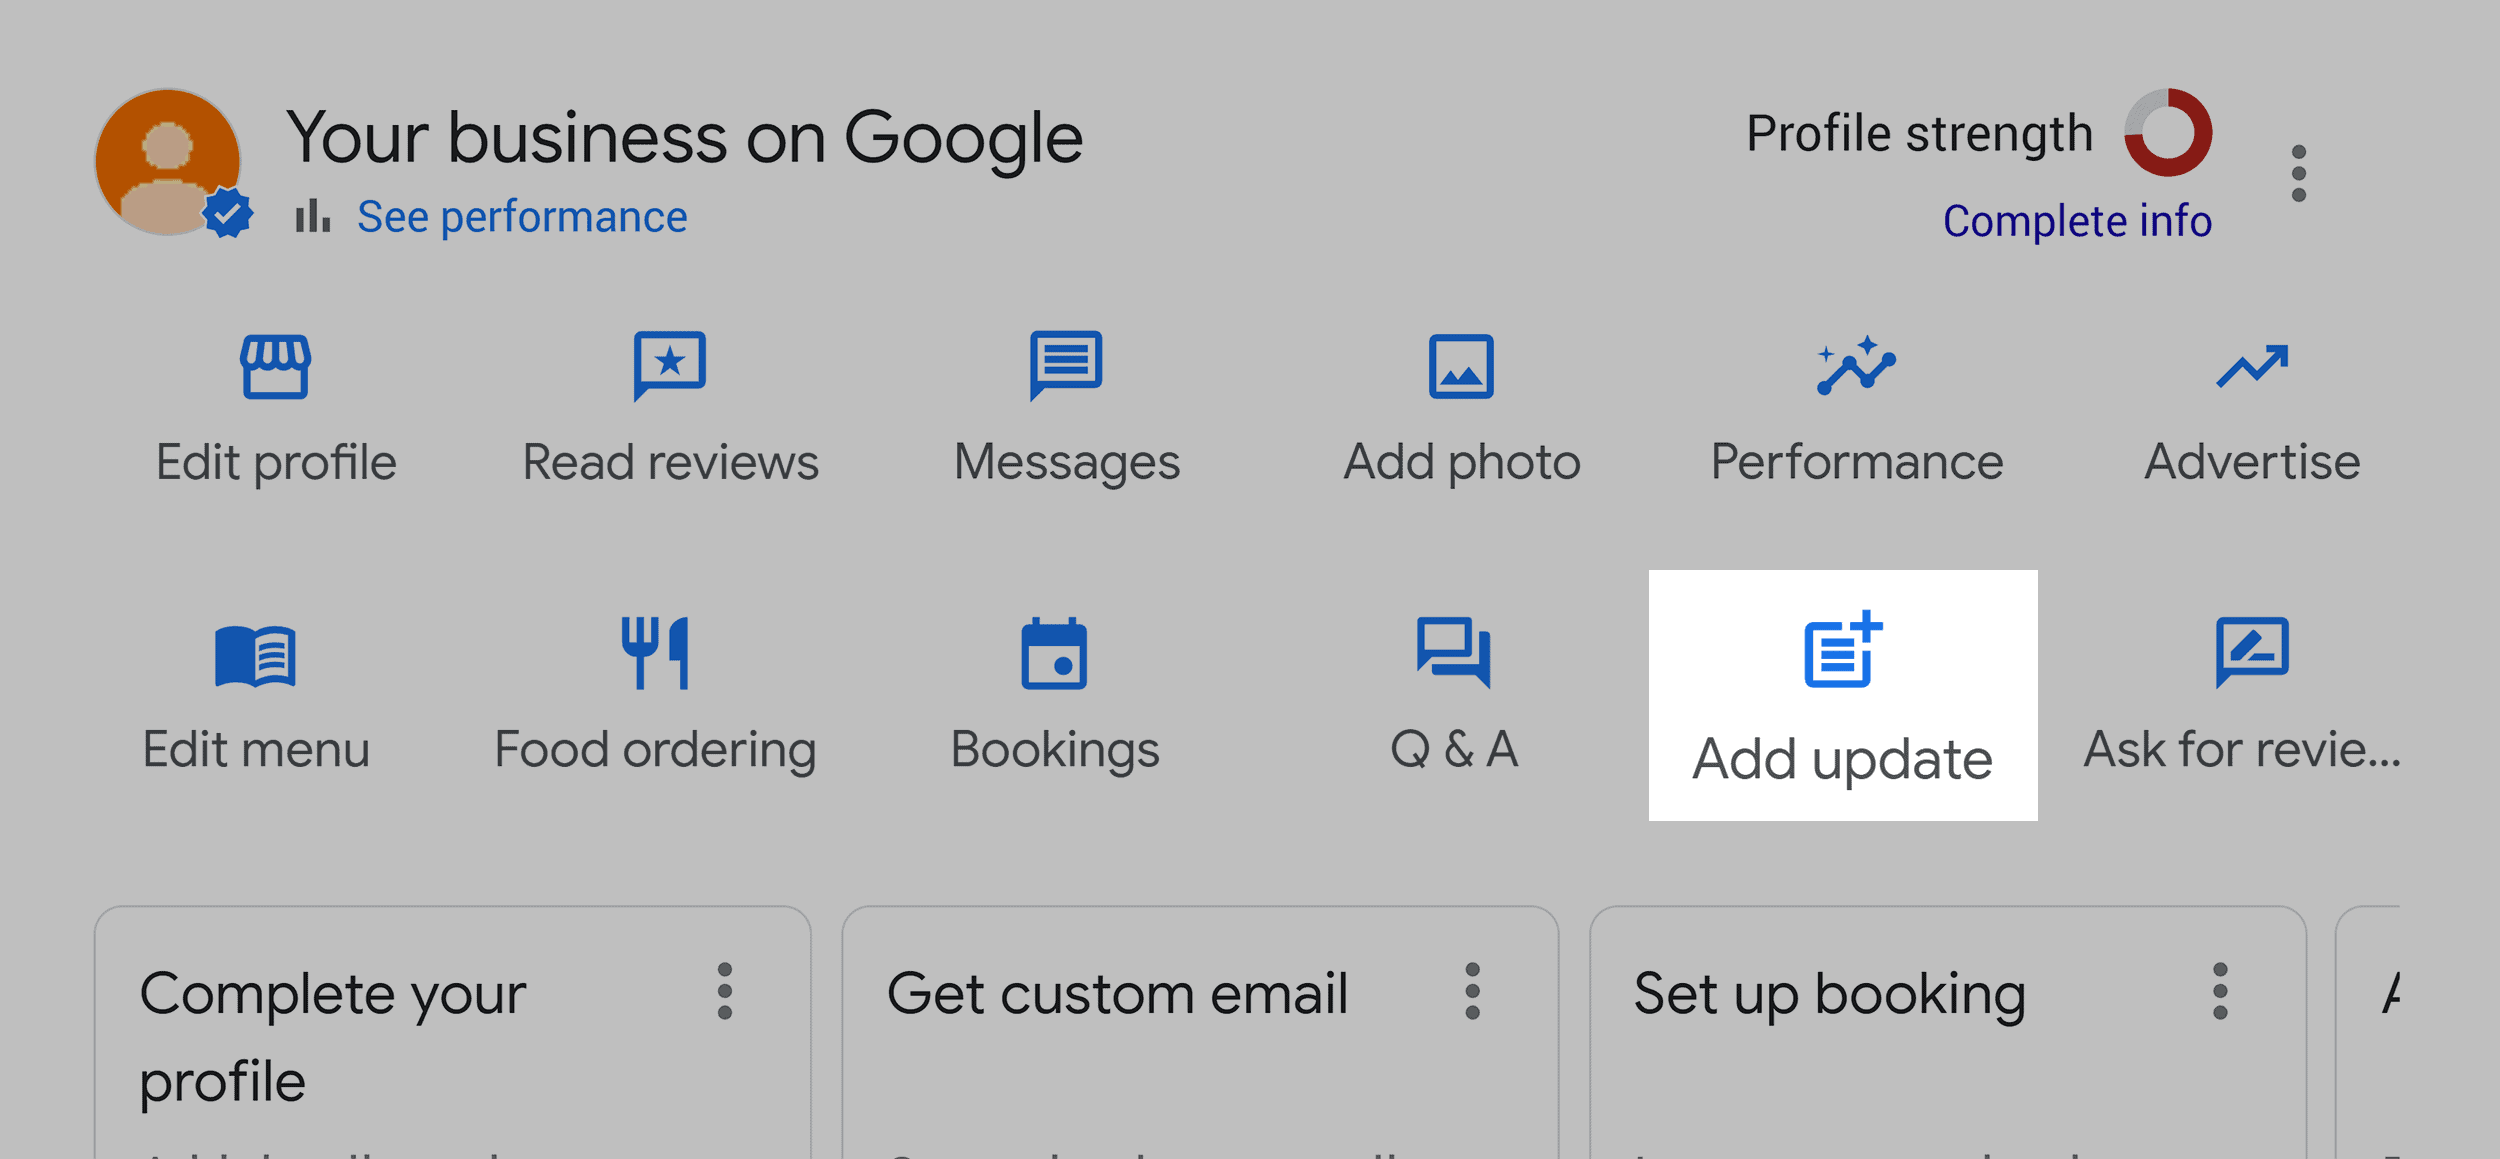 Google Business – Add update